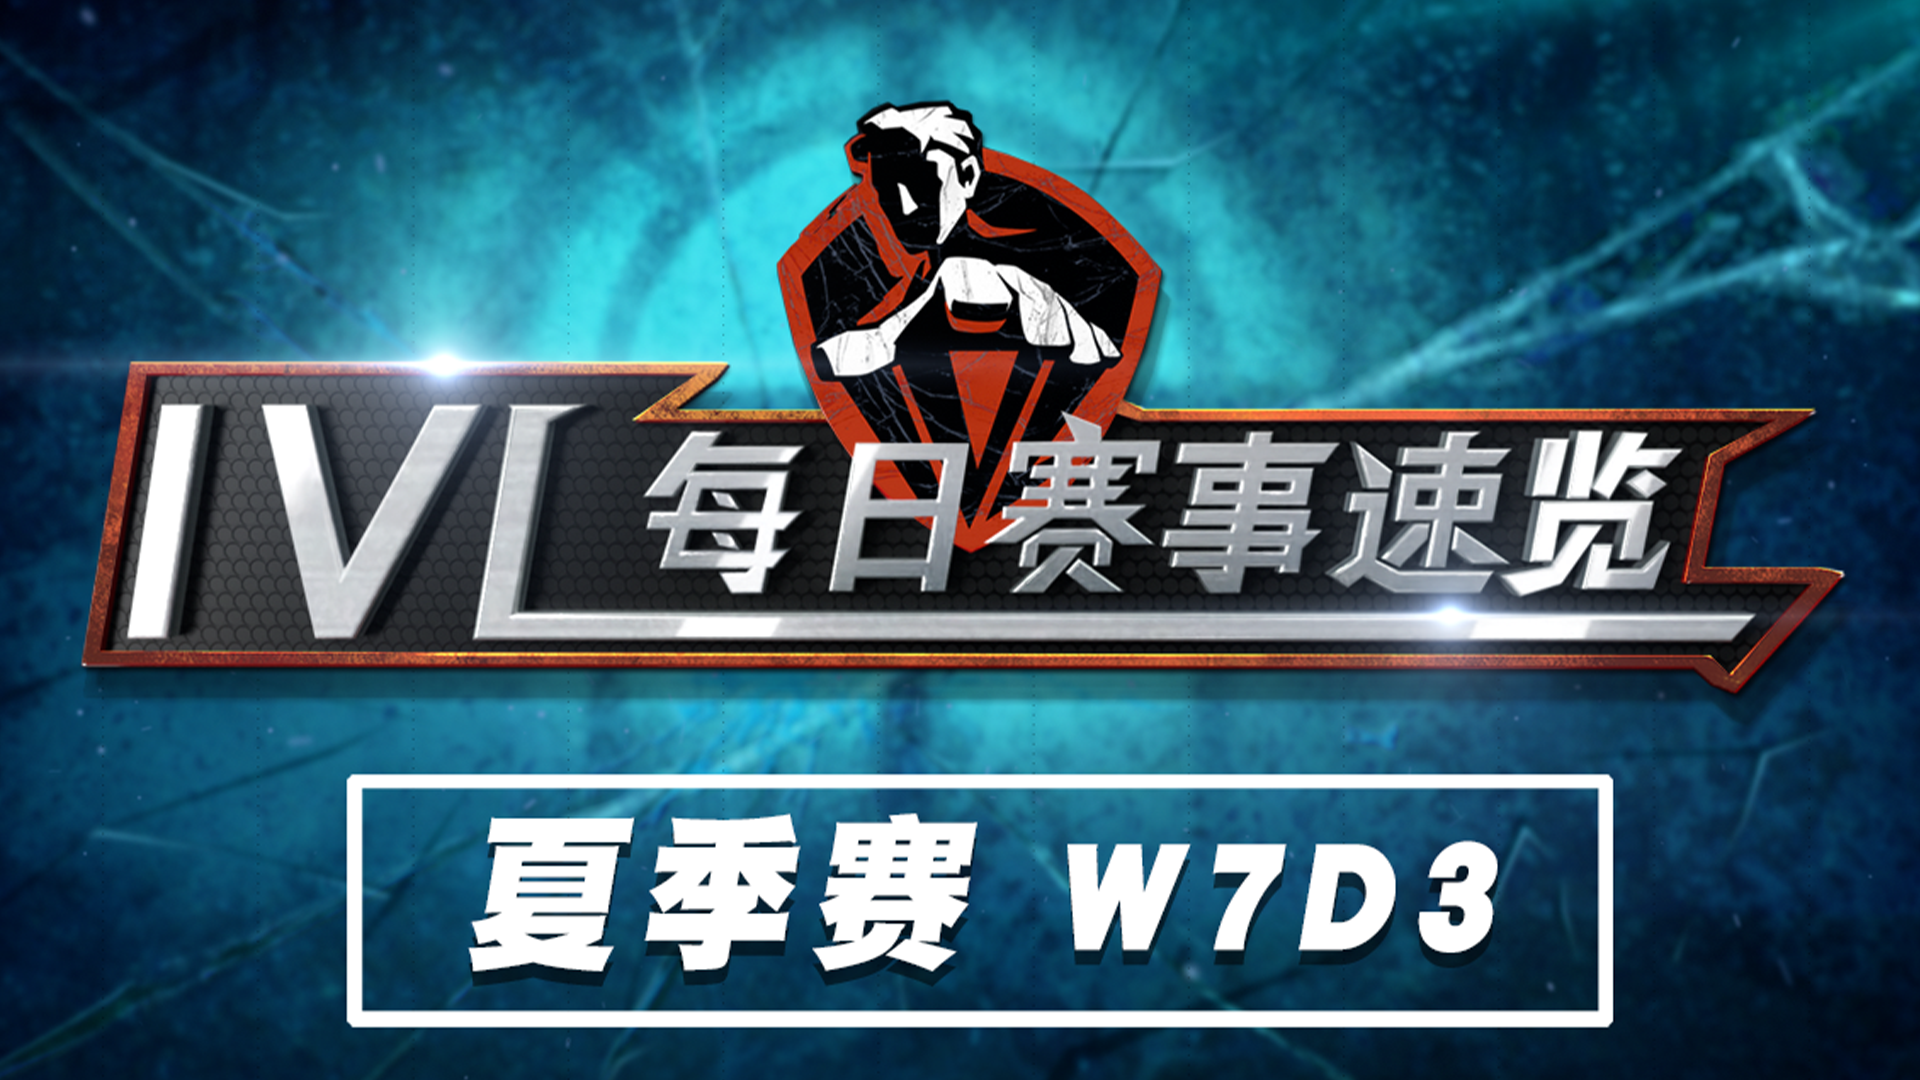 【2020IVL】夏季赛W7D3 赛事速览